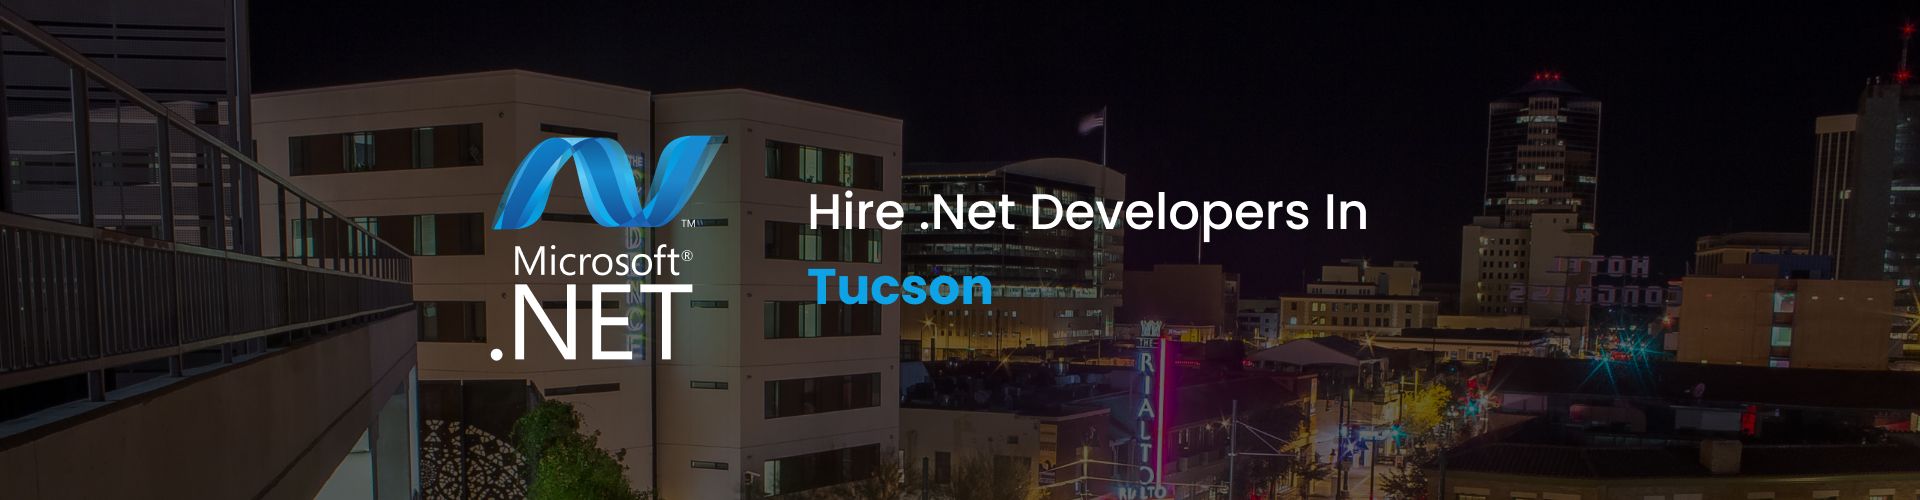 hire dot net developers in tucson